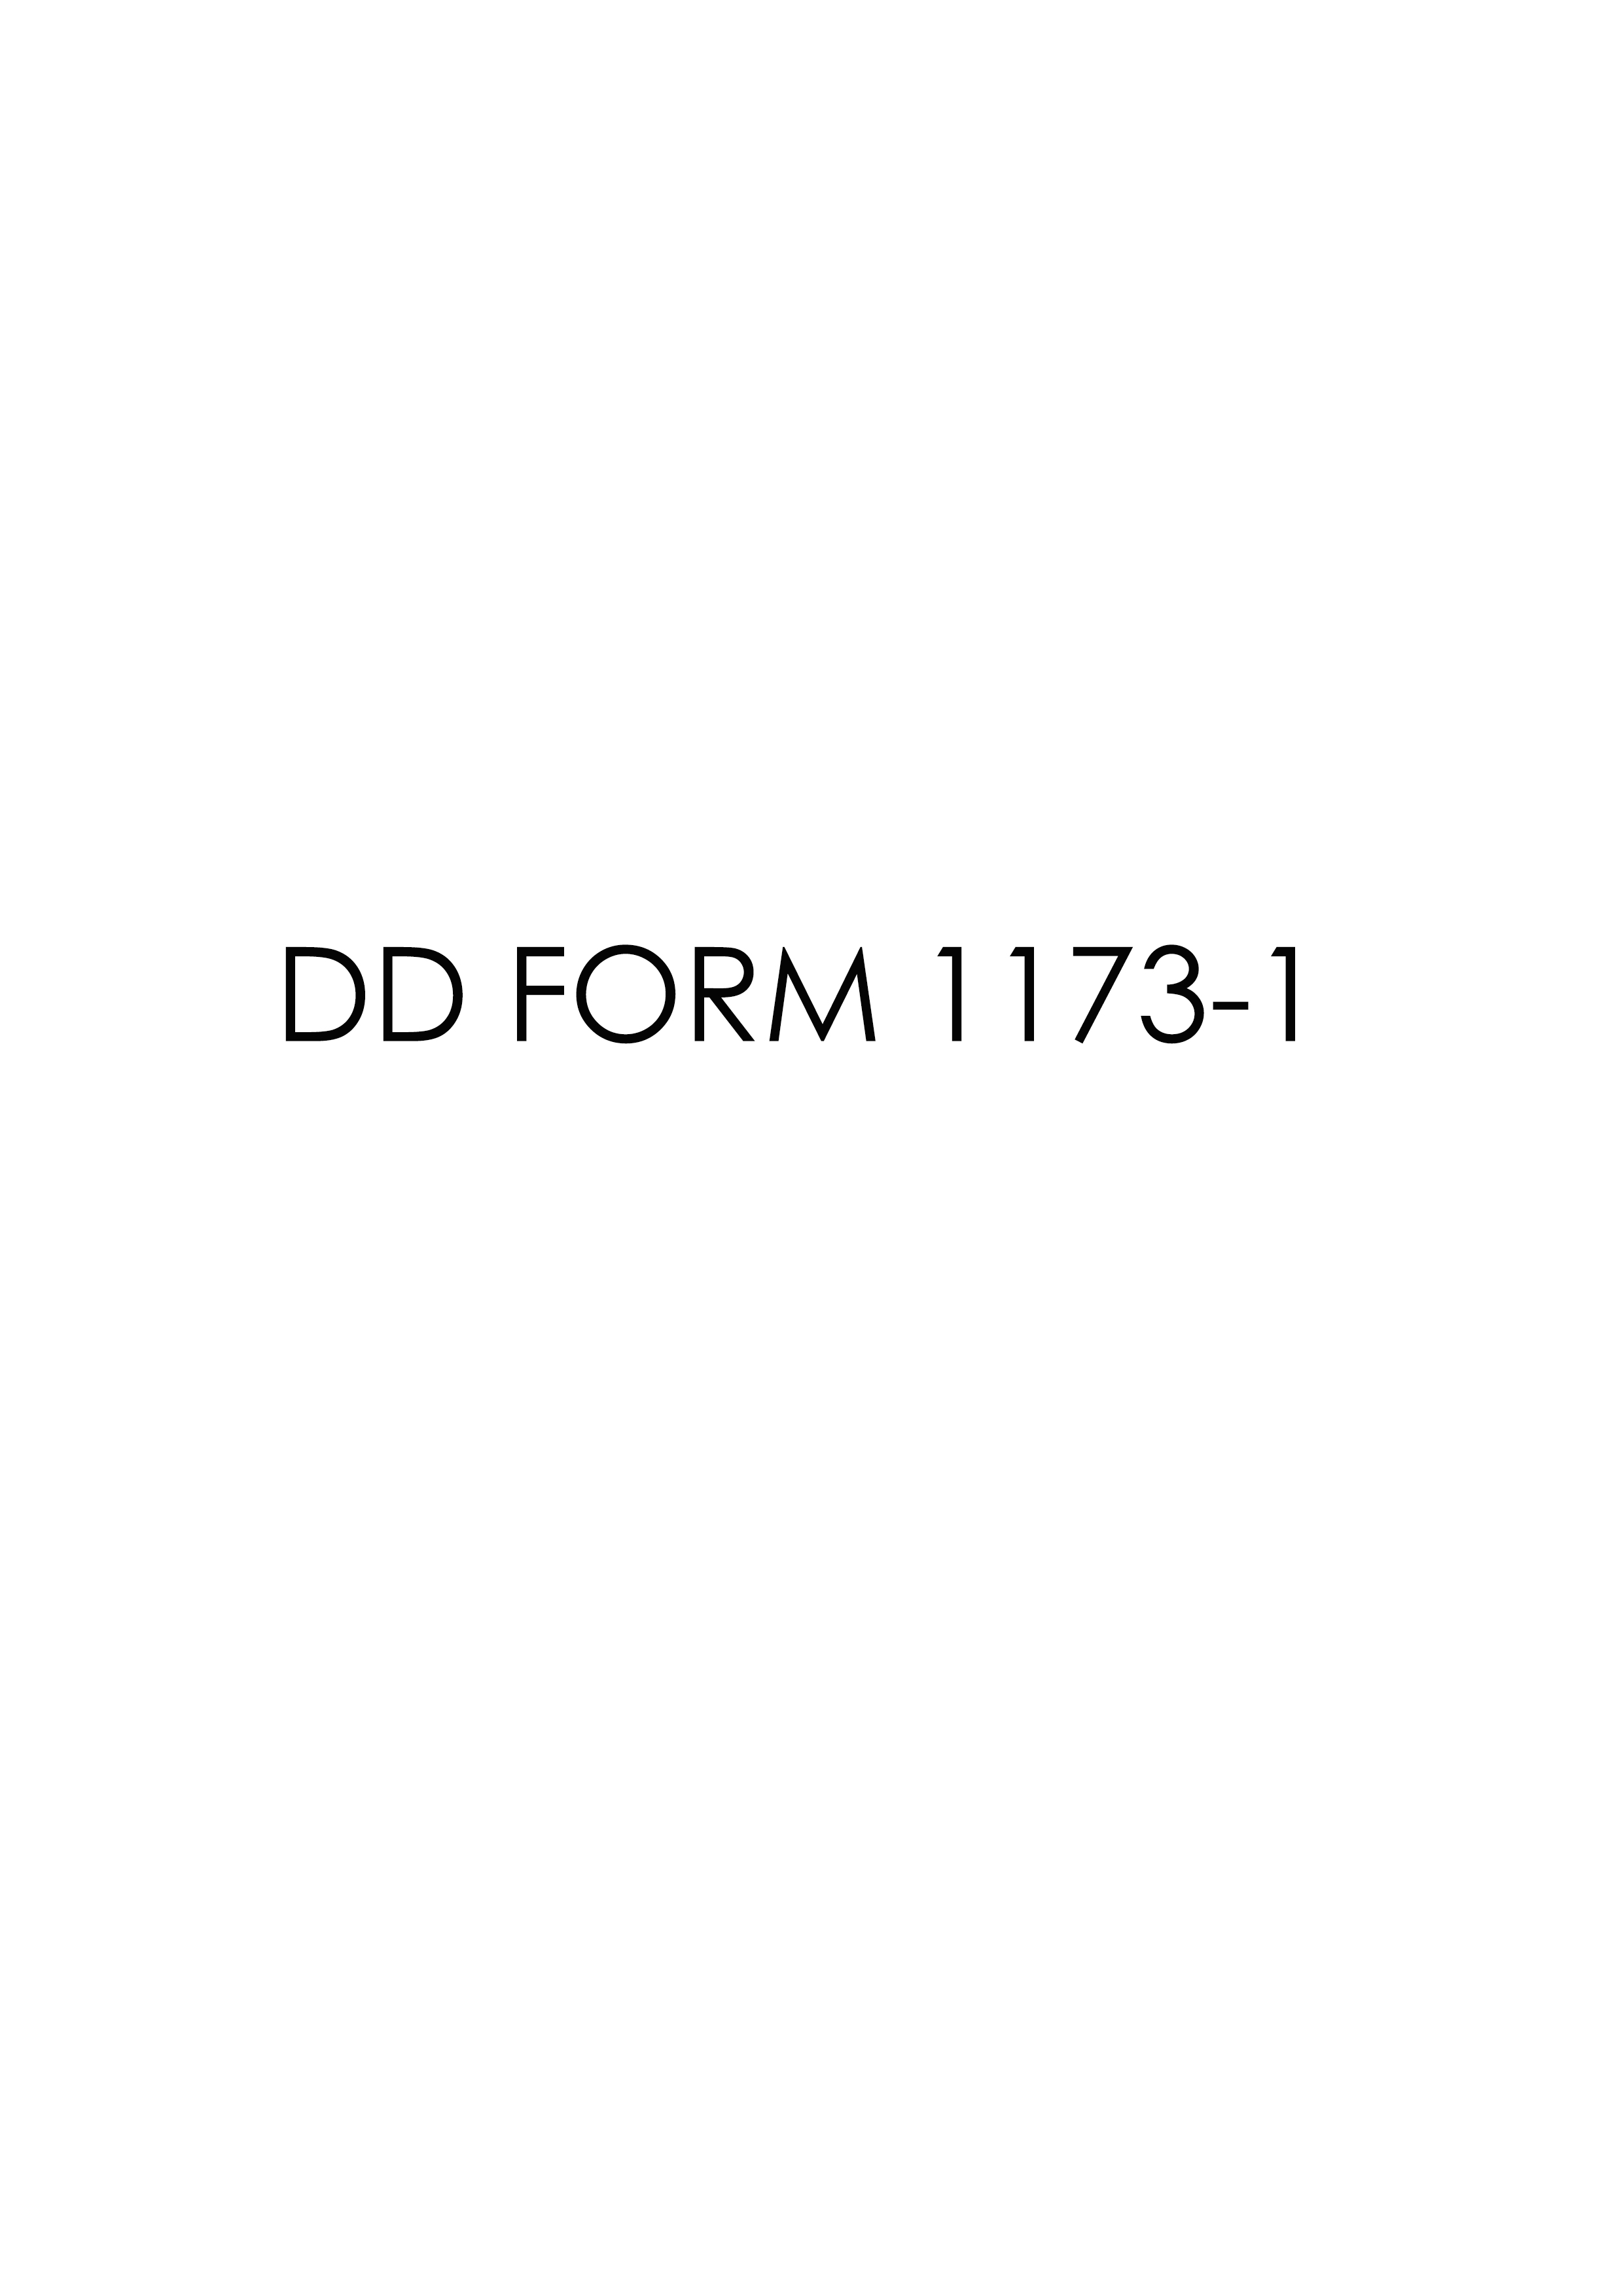 Download dd Form 1173-1